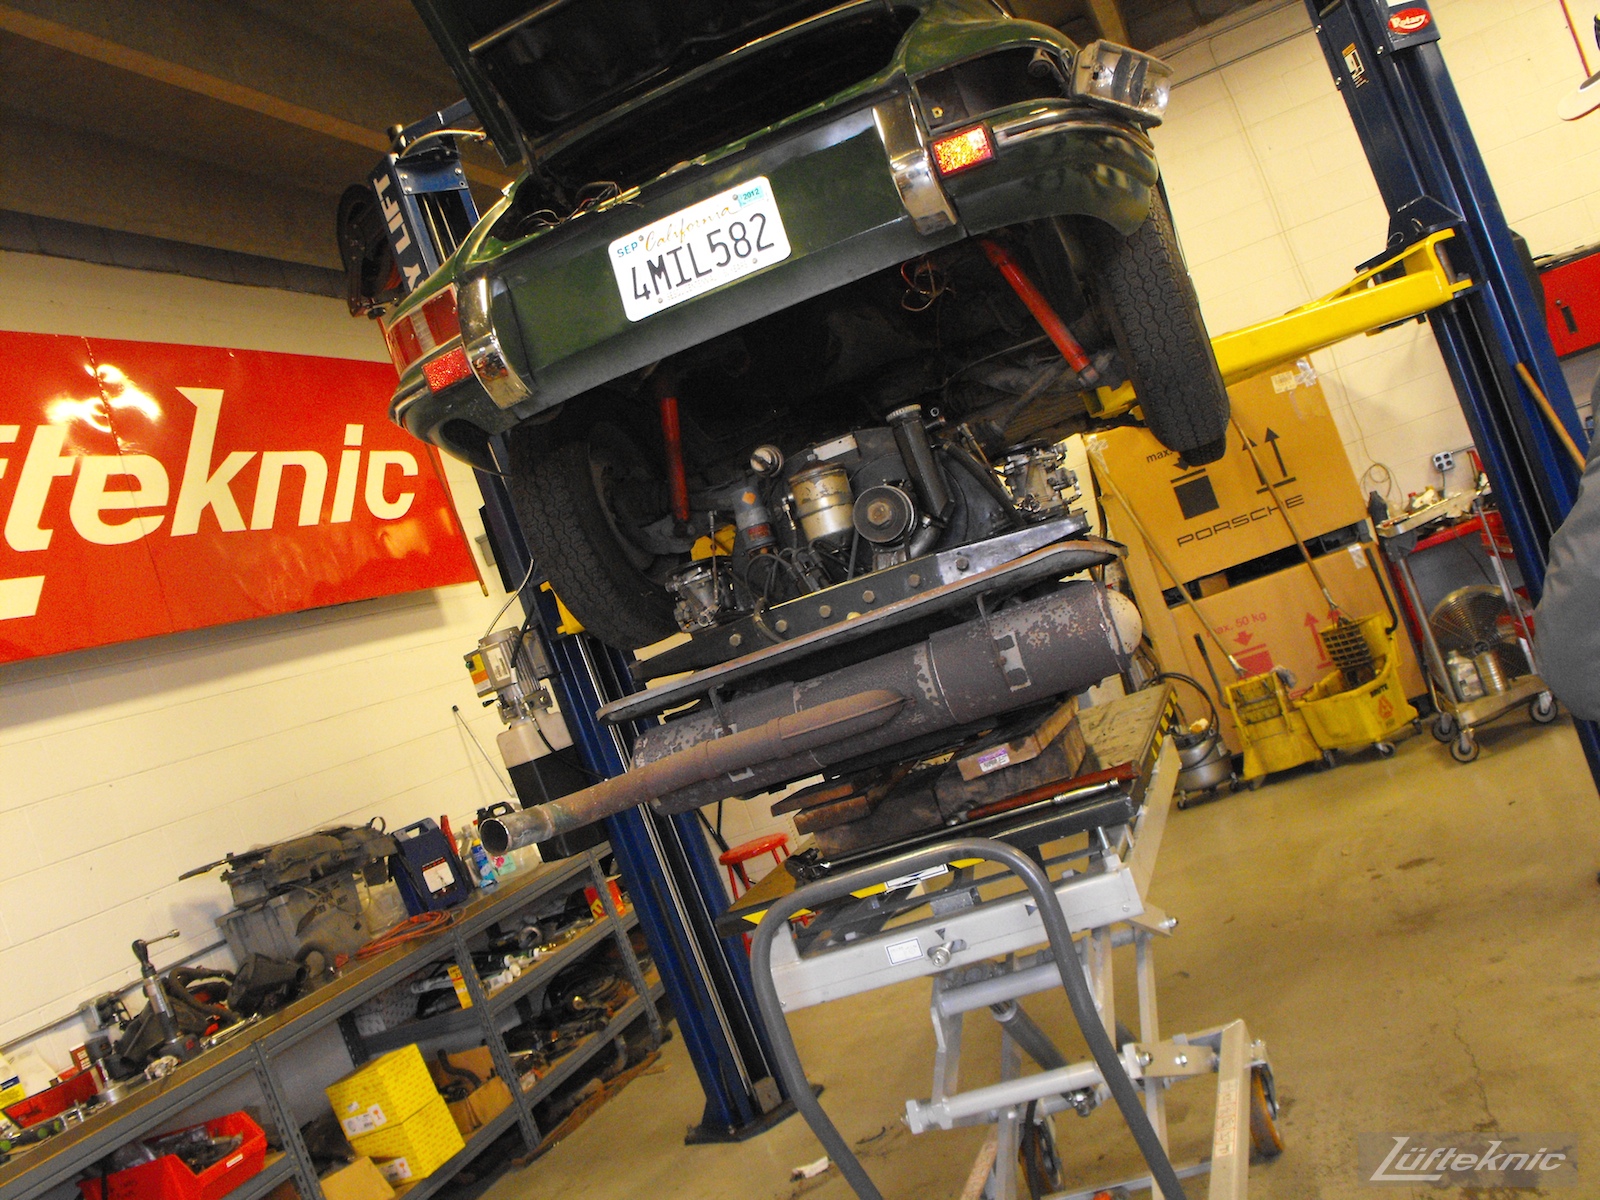 The engine being removed from an Irish Green Porsche 912 undergoing restoration at Lufteknic.